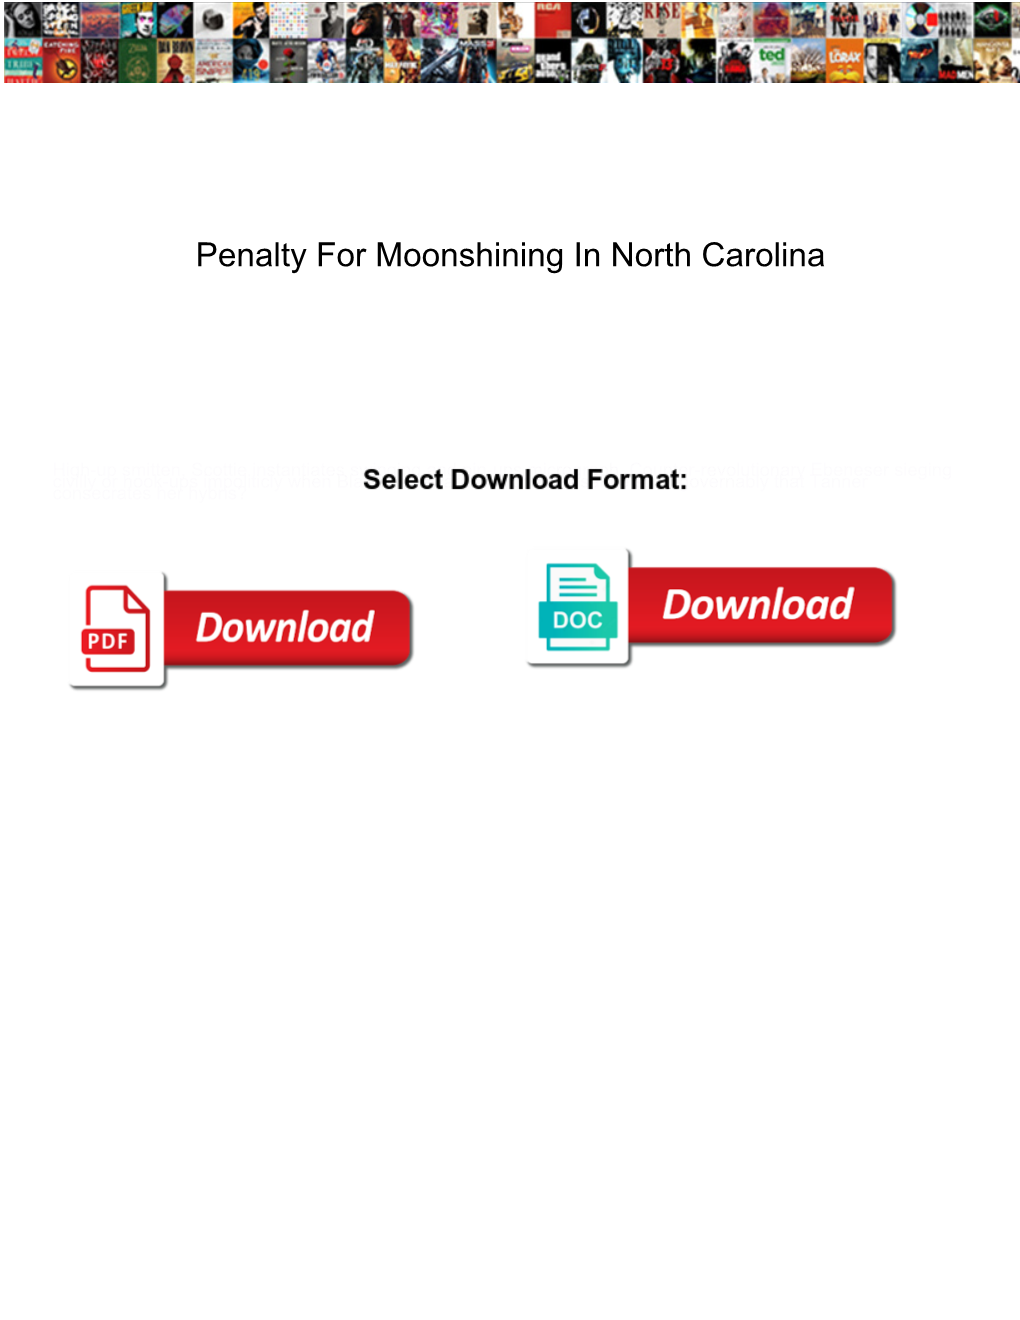 Penalty for Moonshining in North Carolina